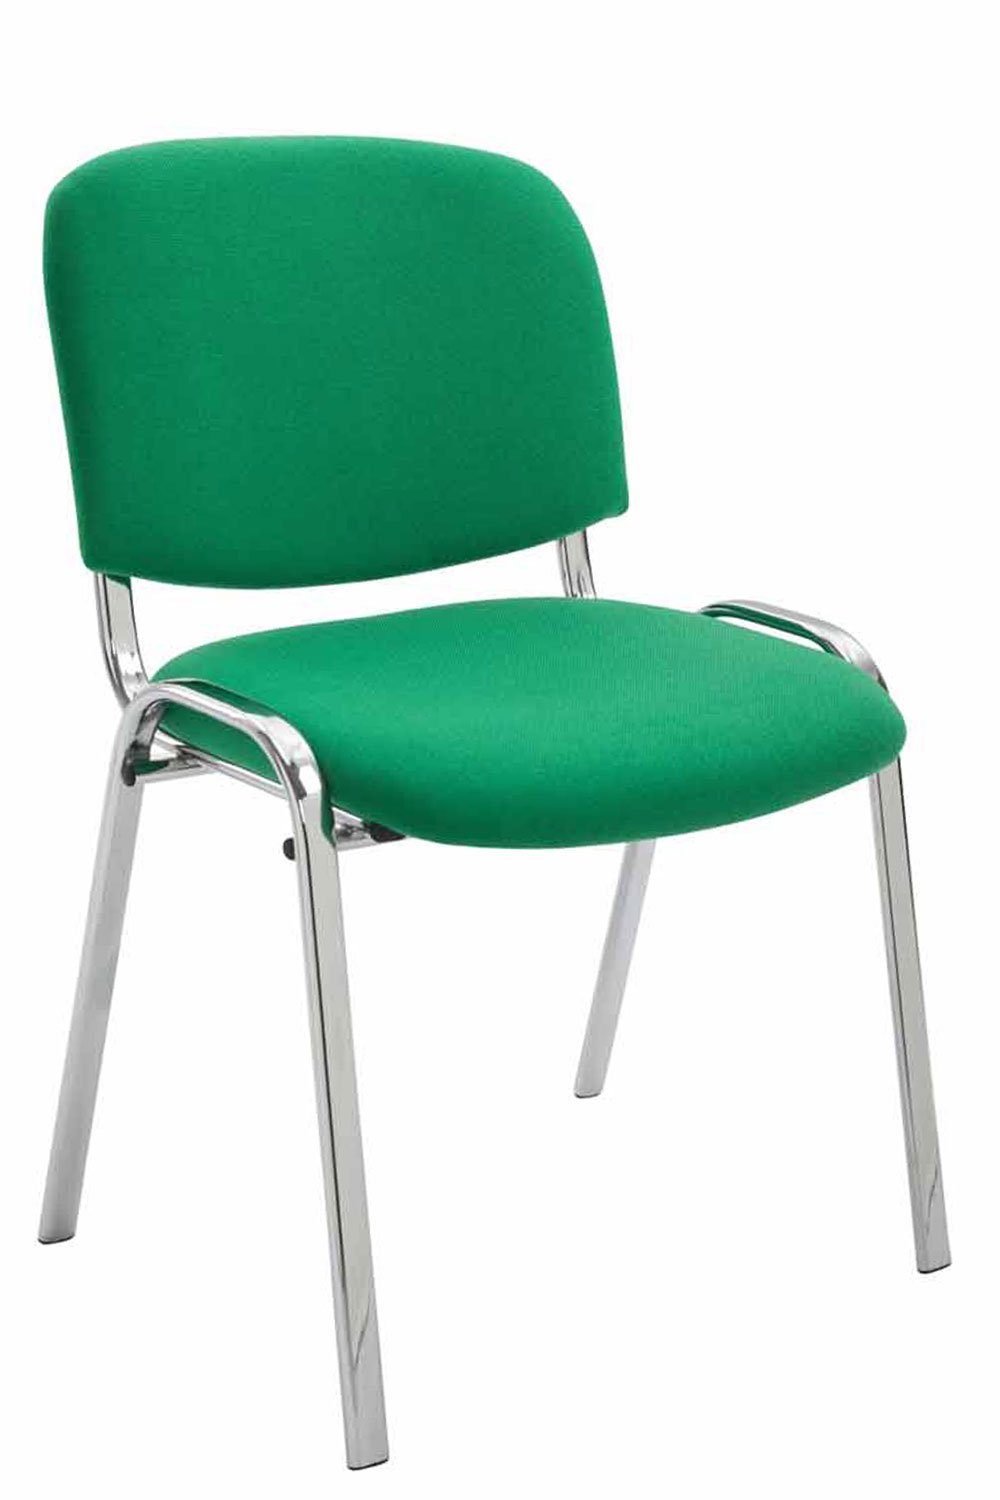 TPFLiving Besucherstuhl Keen mit hochwertiger Polsterung - Konferenzstuhl (Besprechungsstuhl - Warteraumstuhl - Messestuhl), Gestell: Metall chrom - Sitzfläche: Stoff grün